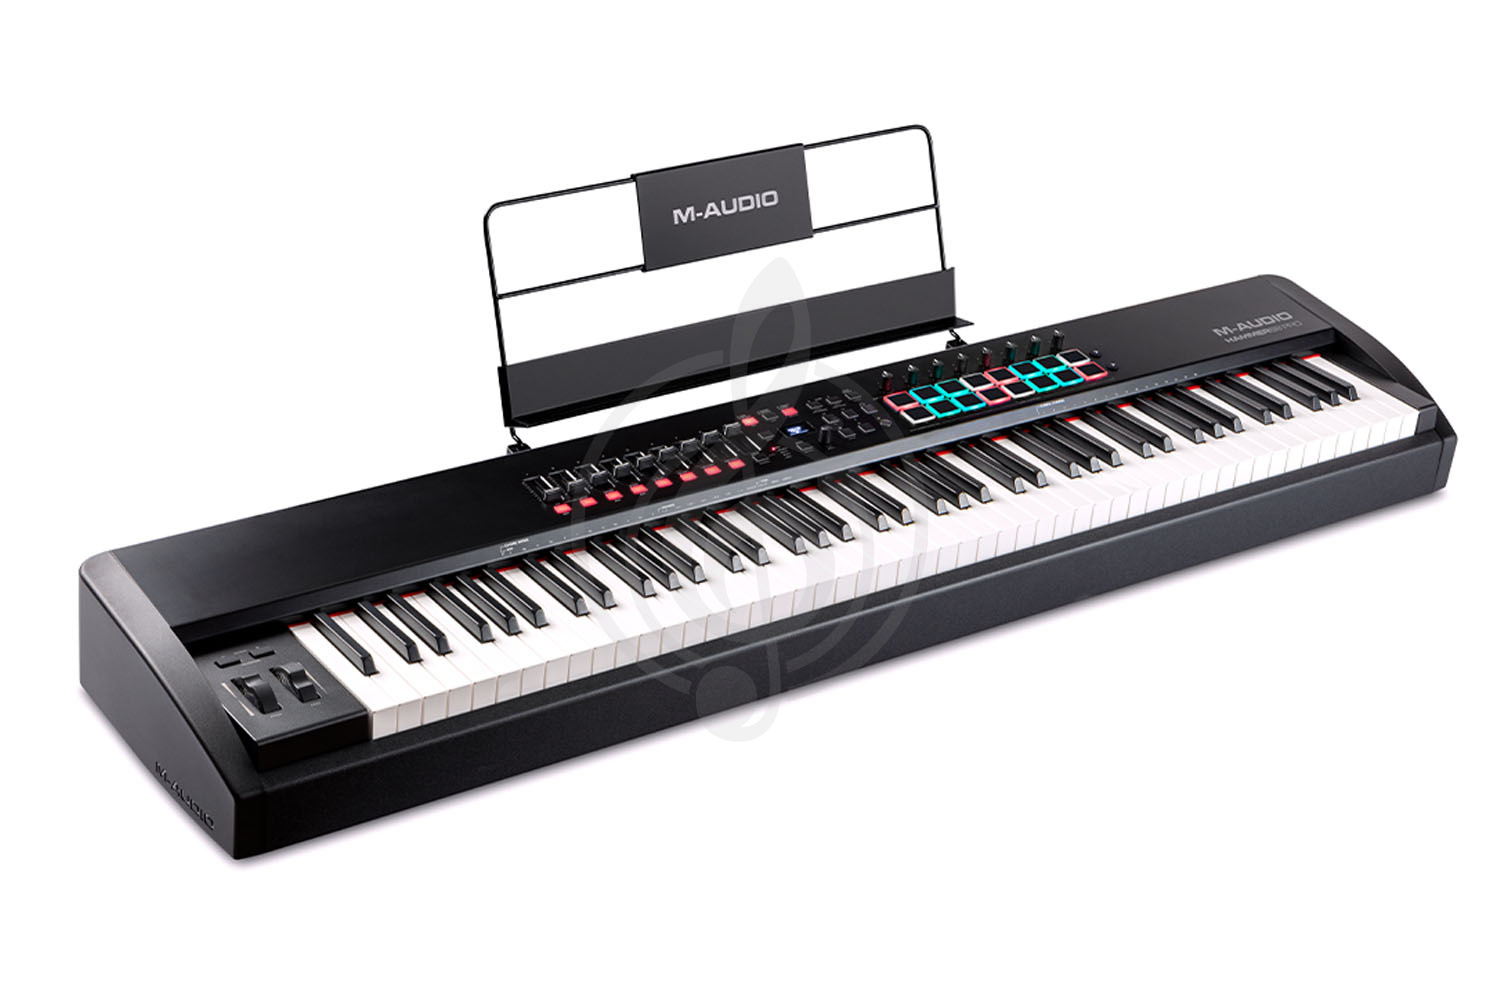 MIDI-клавиатура Миди-клавиатуры M-Audio M-Audio Hammer 88 - USB миди-клавиатура Hammer 88 - фото 1